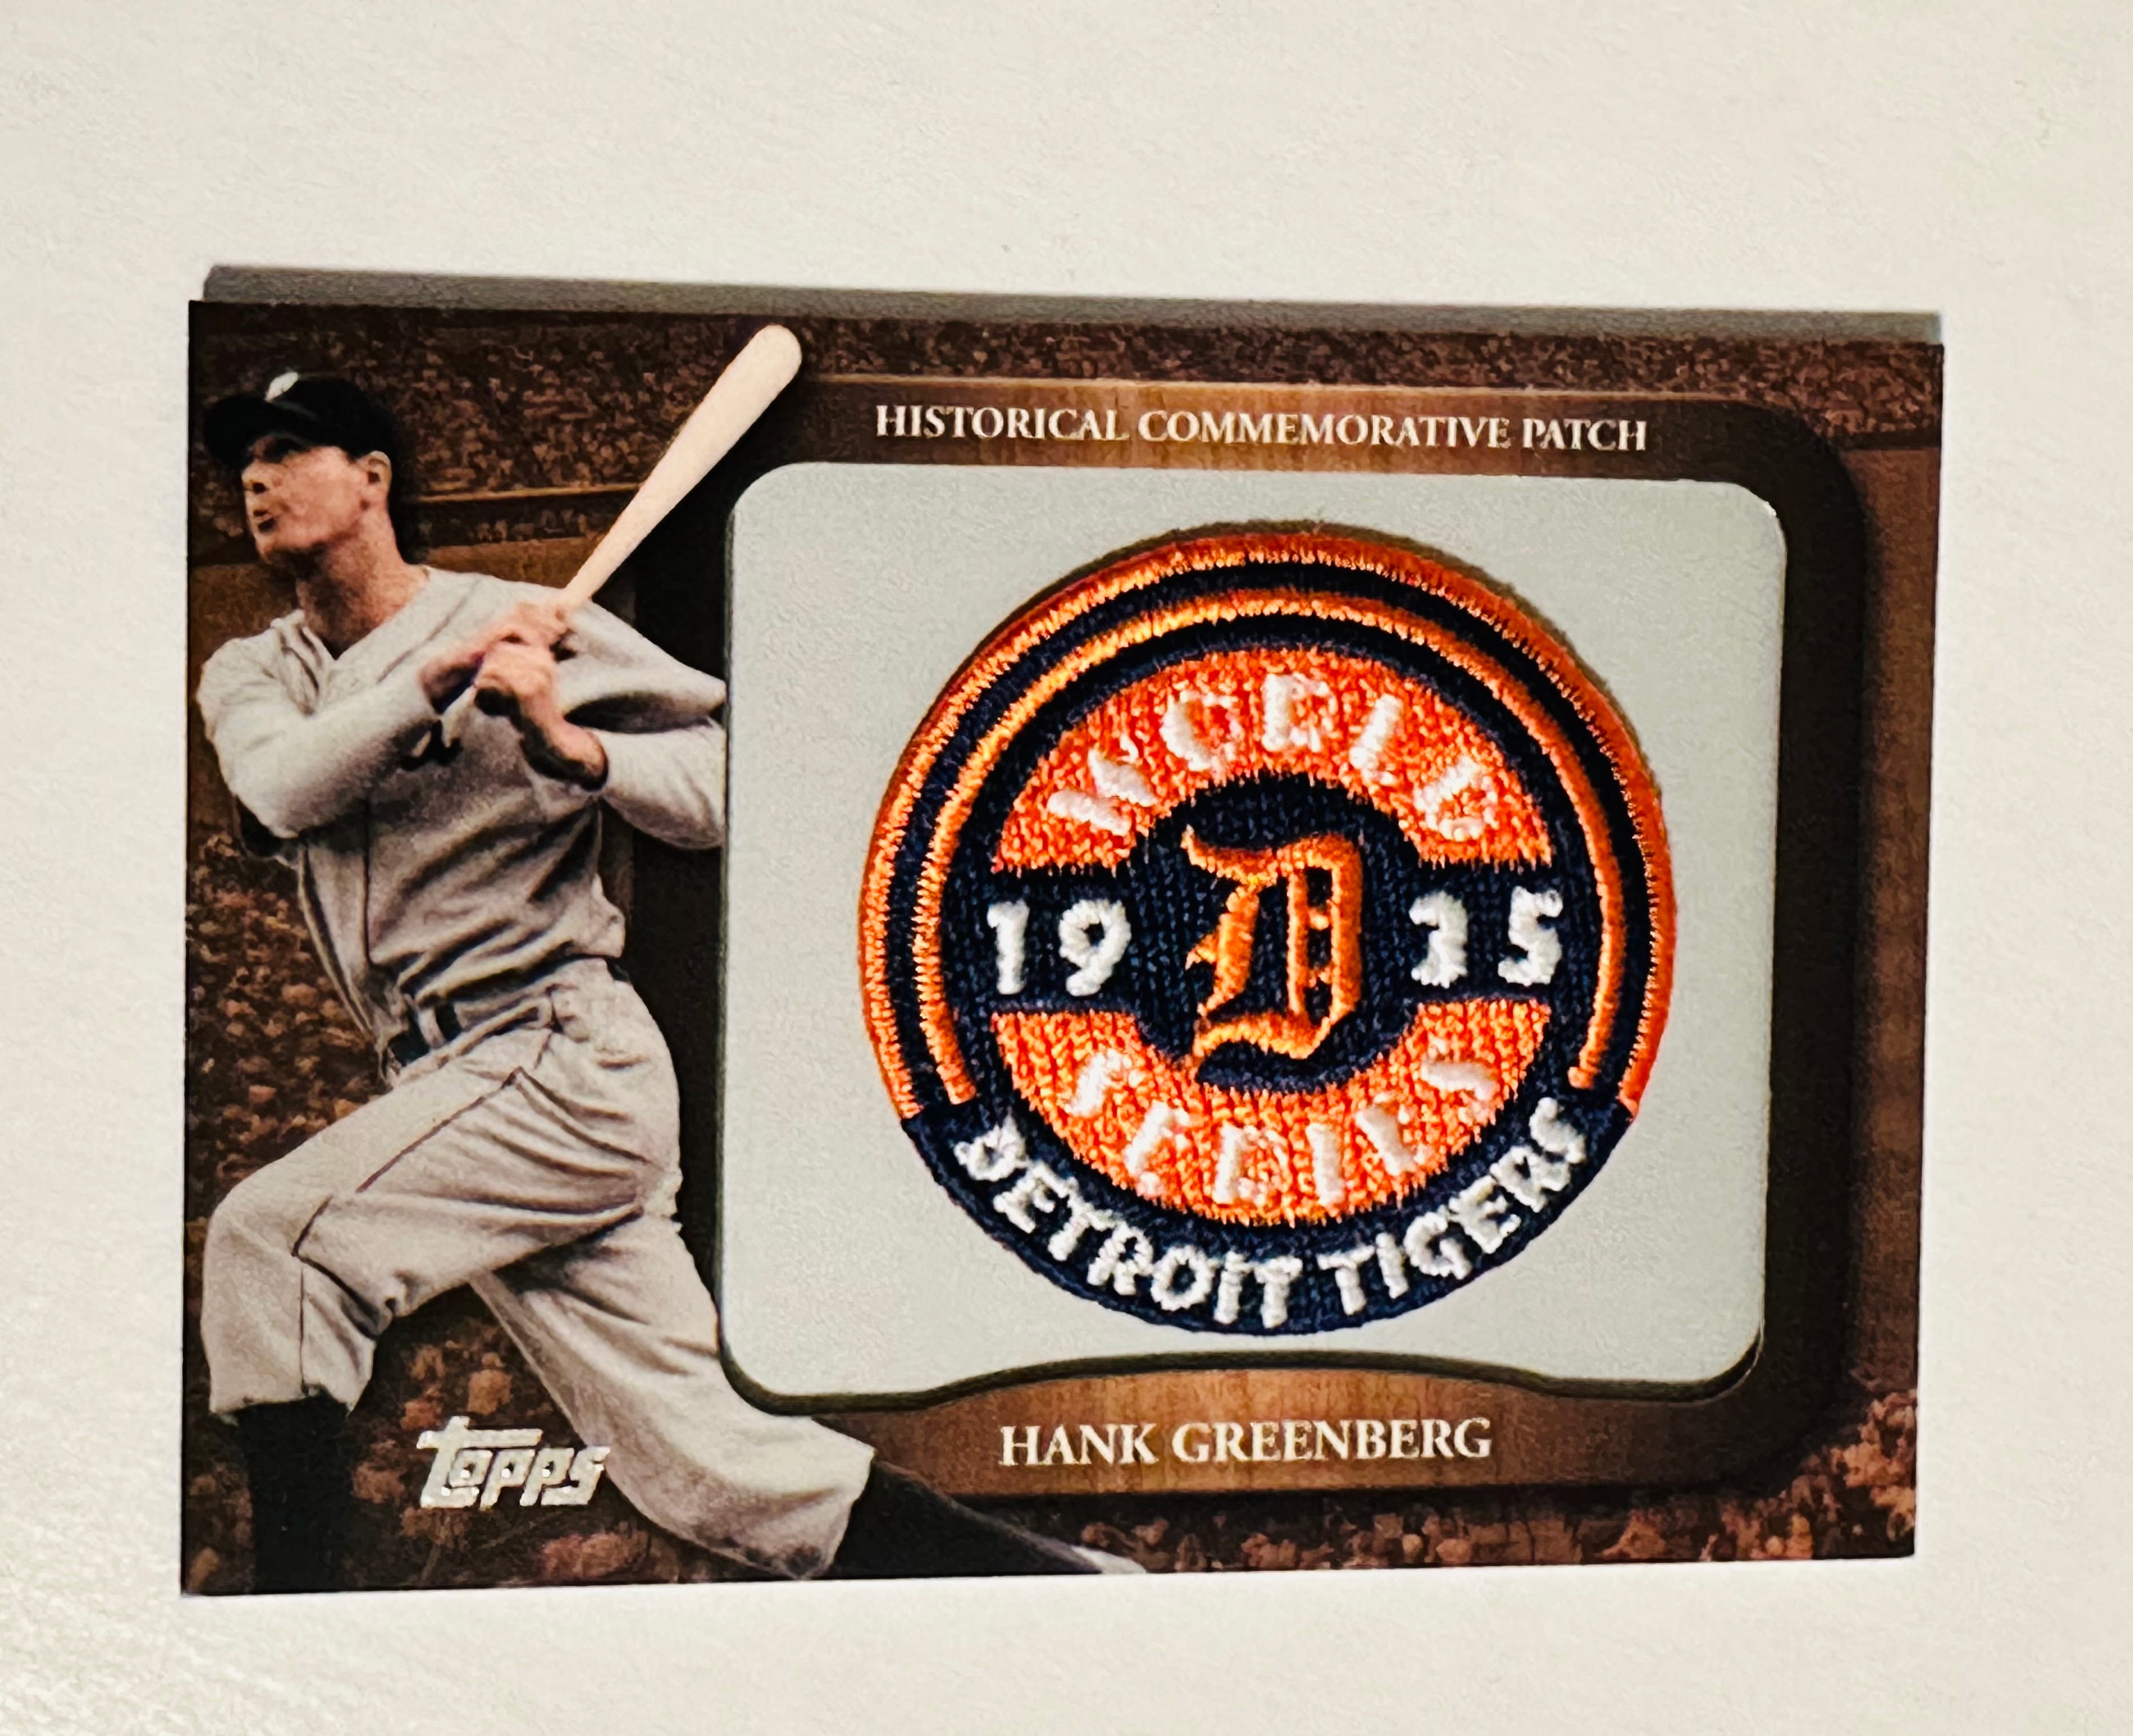 Hank Greenberg, Detroit Tigers topps baseball commemorative patch insert card 2009